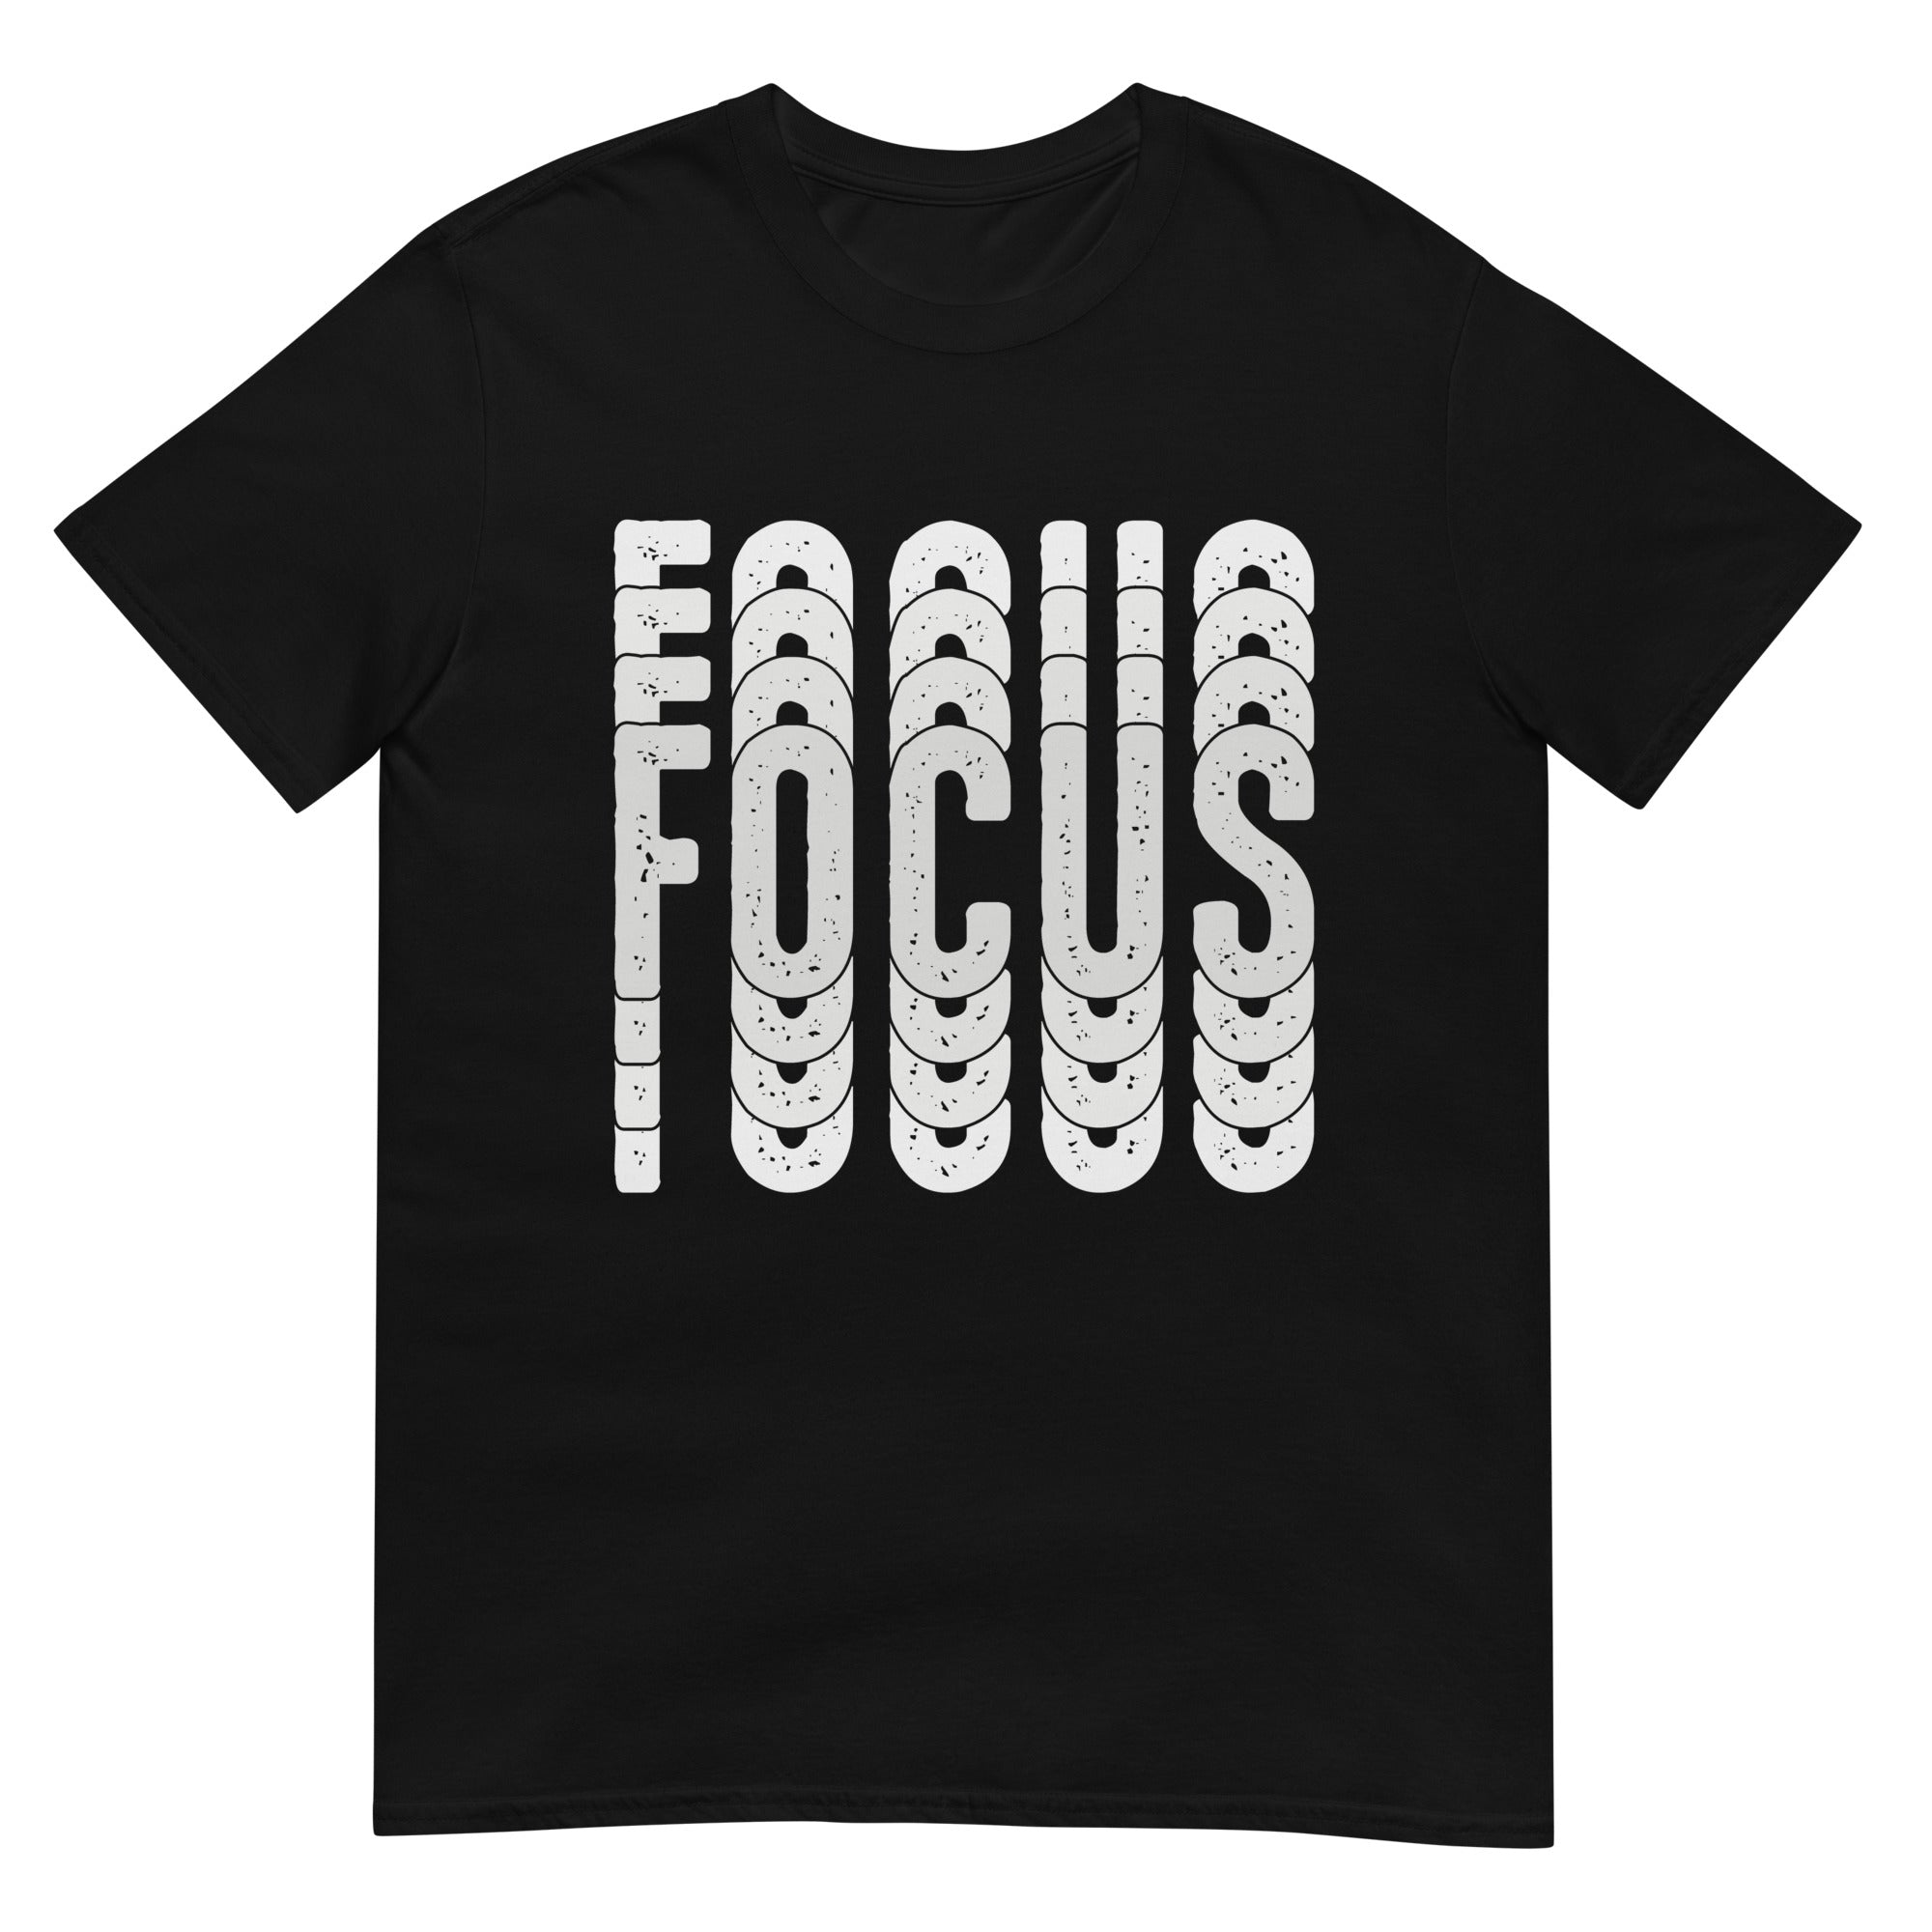 Focus - Short-Sleeve Unisex T-Shirt